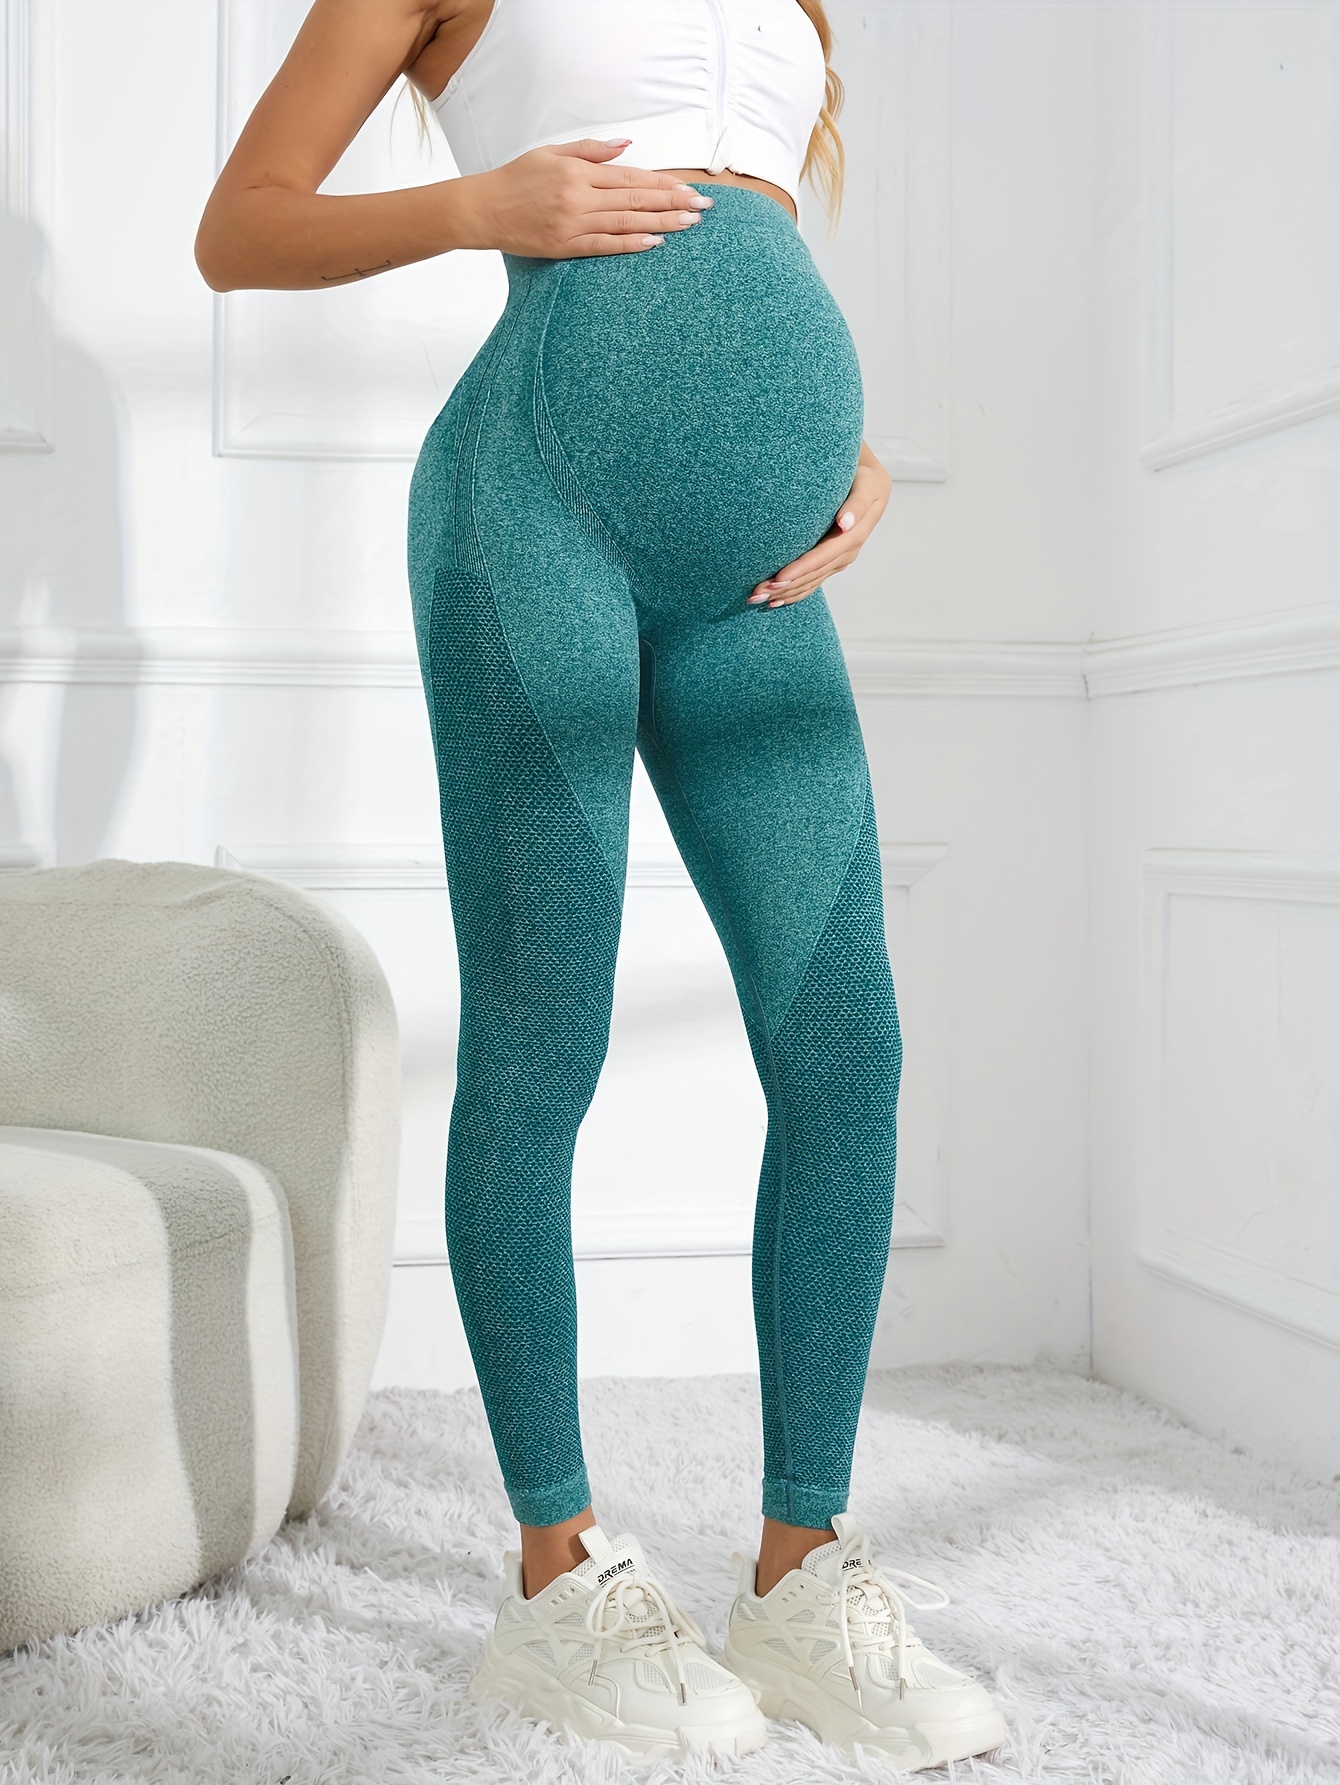 Pregnant Women Warm Maternity Stretchy Slim Skinny Leggings Pants 